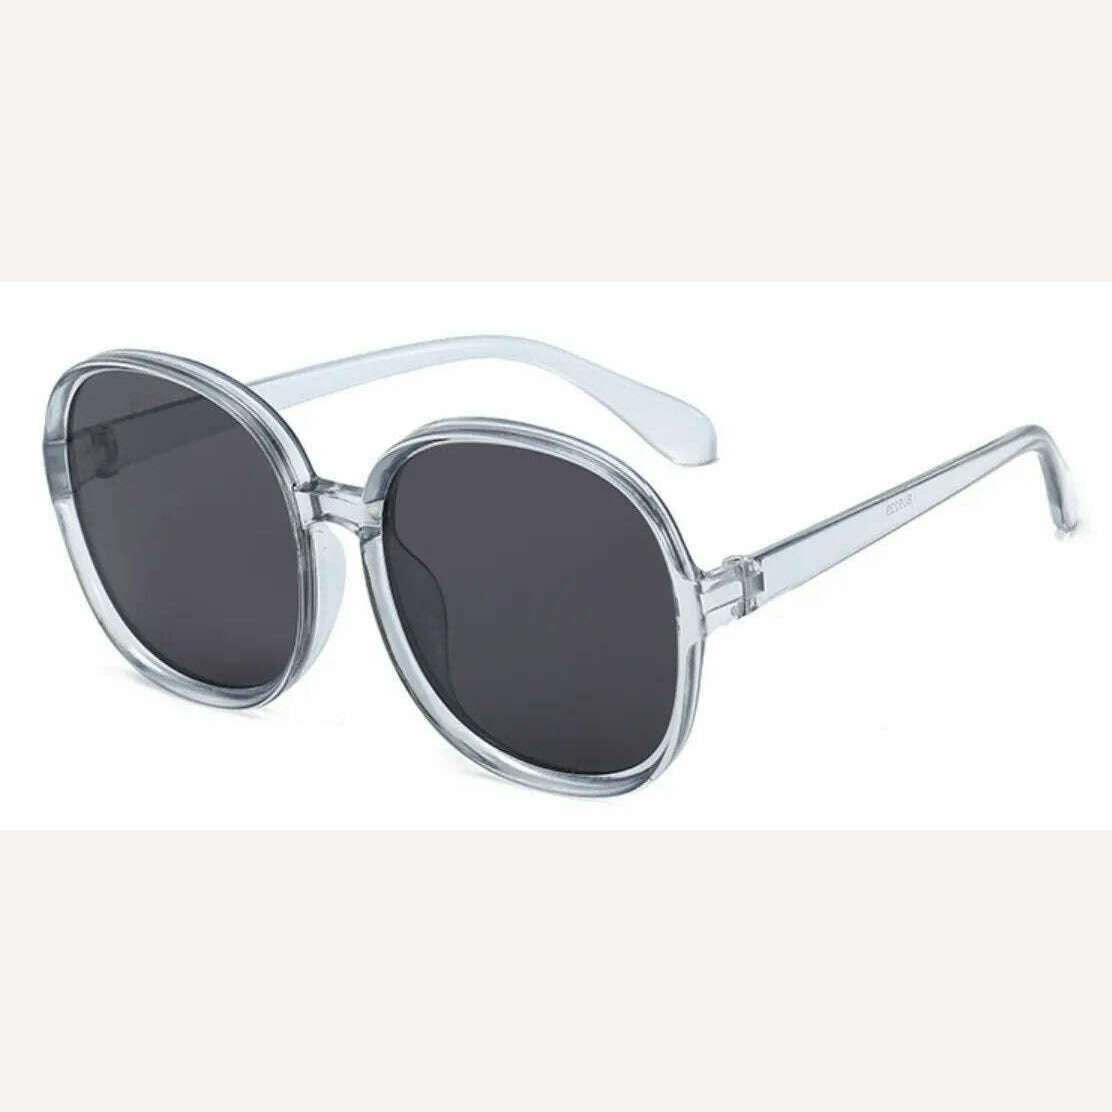 KIMLUD, 2021 Plastic Classic Vintage Woman Sunglasses Oversized Round Frame Luxury Brand Designer Female Glasses Big Shades Oculos, Gray Gray, KIMLUD Women's Clothes